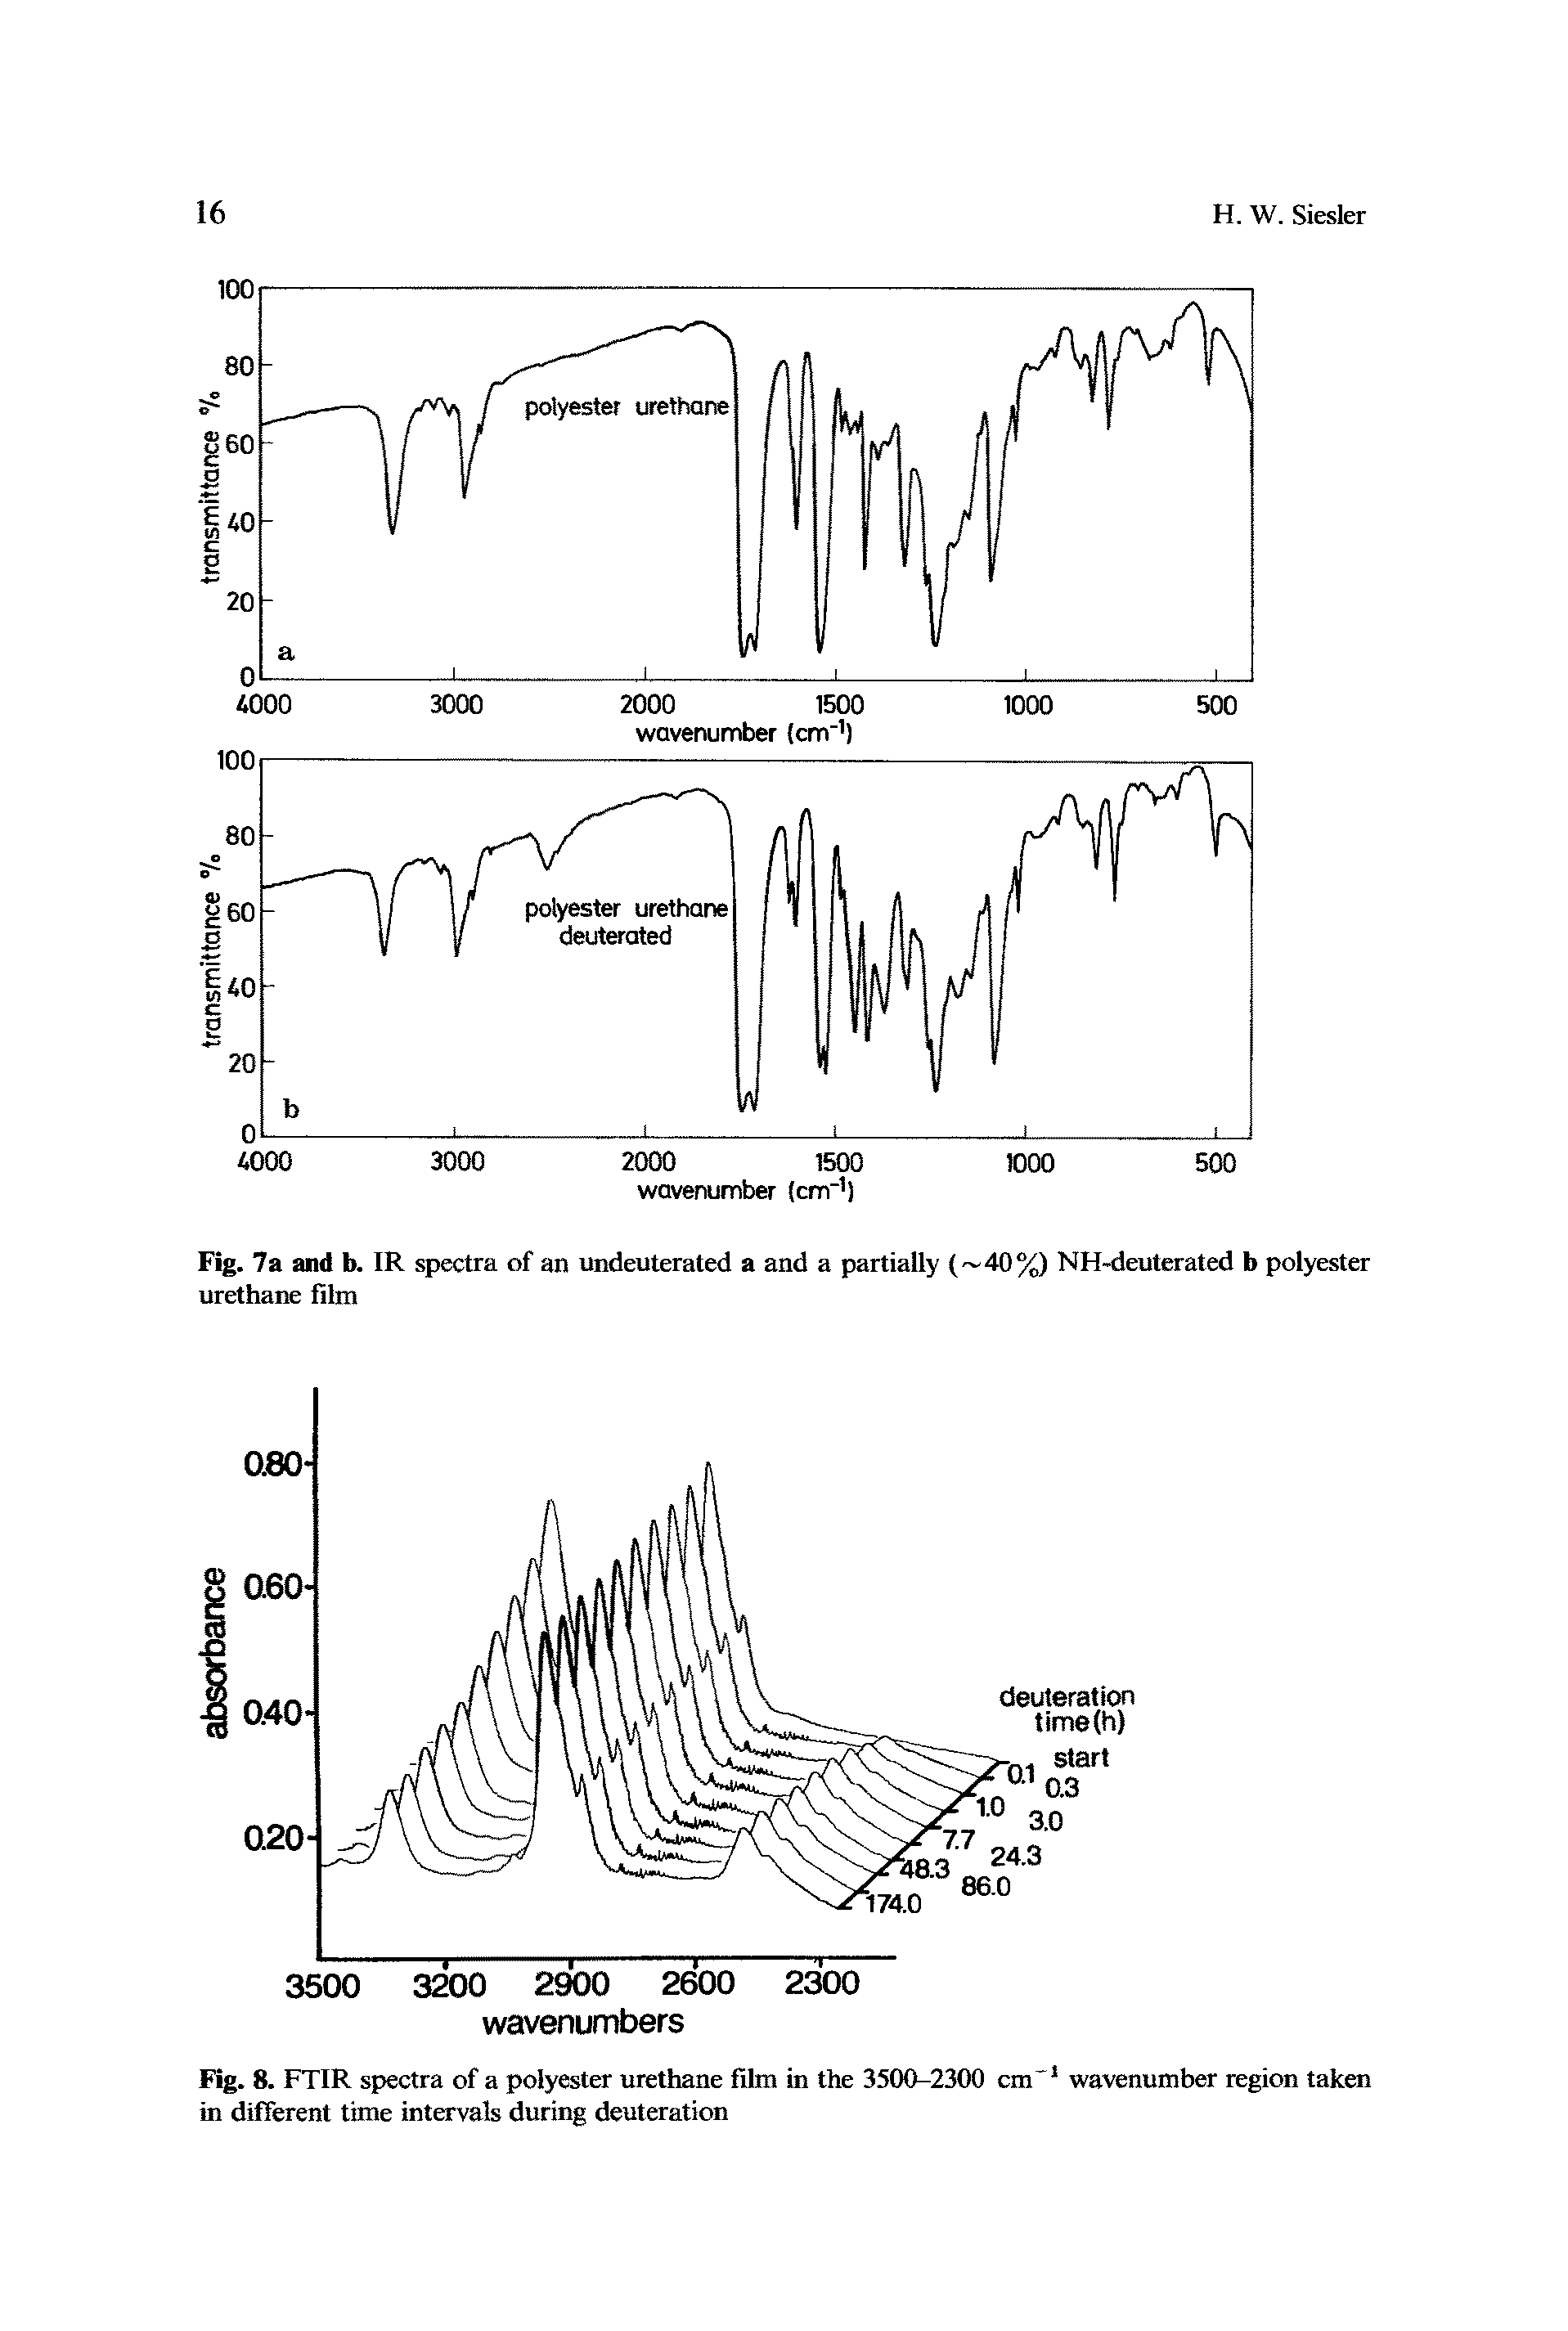 Fig. 8. FTIR spectra of a polyester urethane film in the 3500-2300 cm" wavenumber region taken in different time intervals during deuteration...